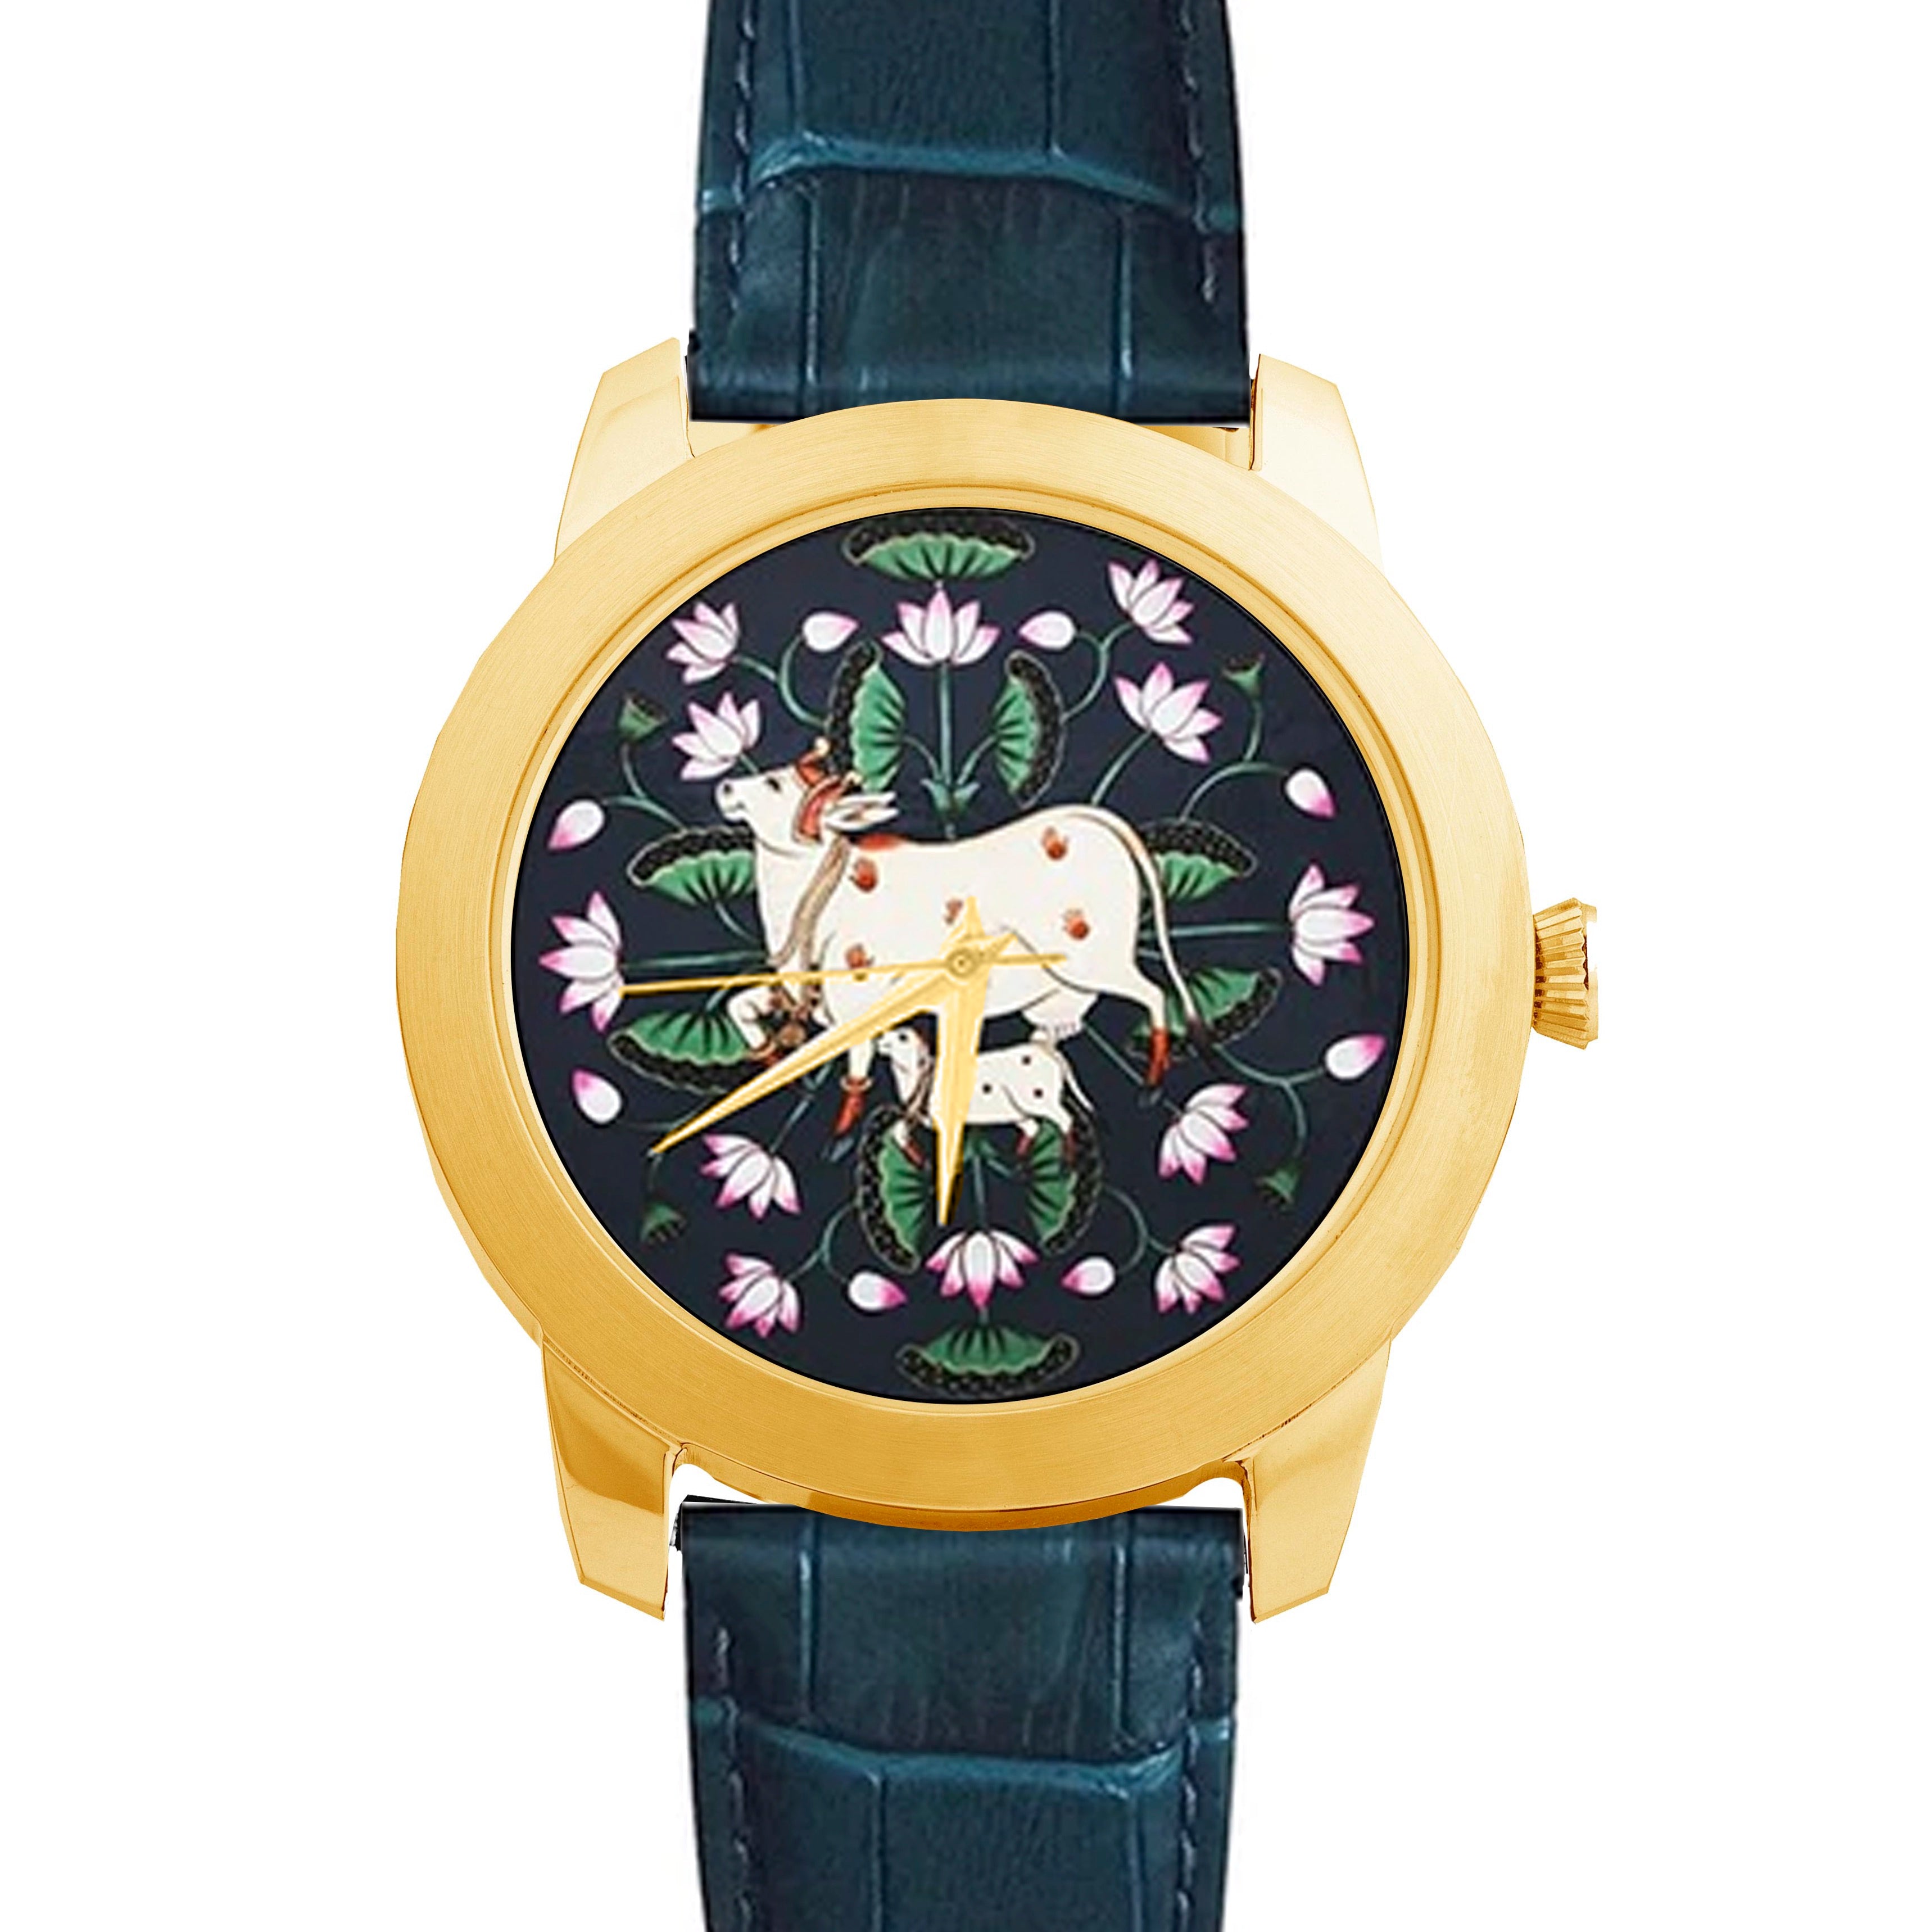 Graceful Cows Watch - Pichwai Watch (40mm)